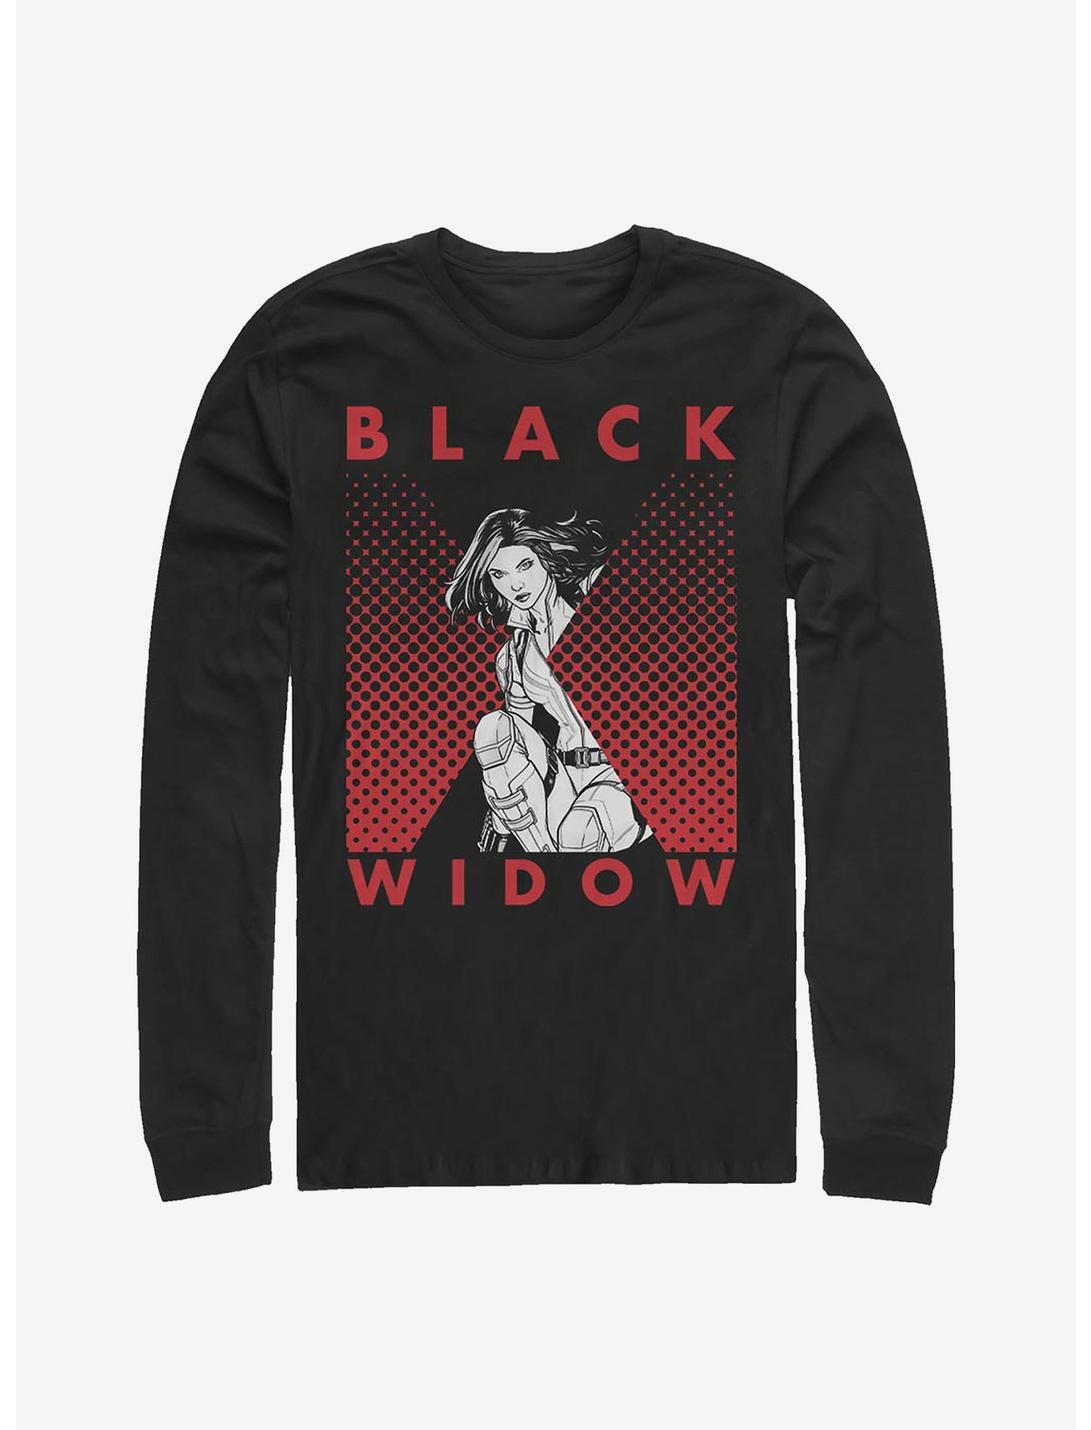 Marvel Black Widow Halftone Black Widow Long-Sleeve T-Shirt, BLACK, hi-res